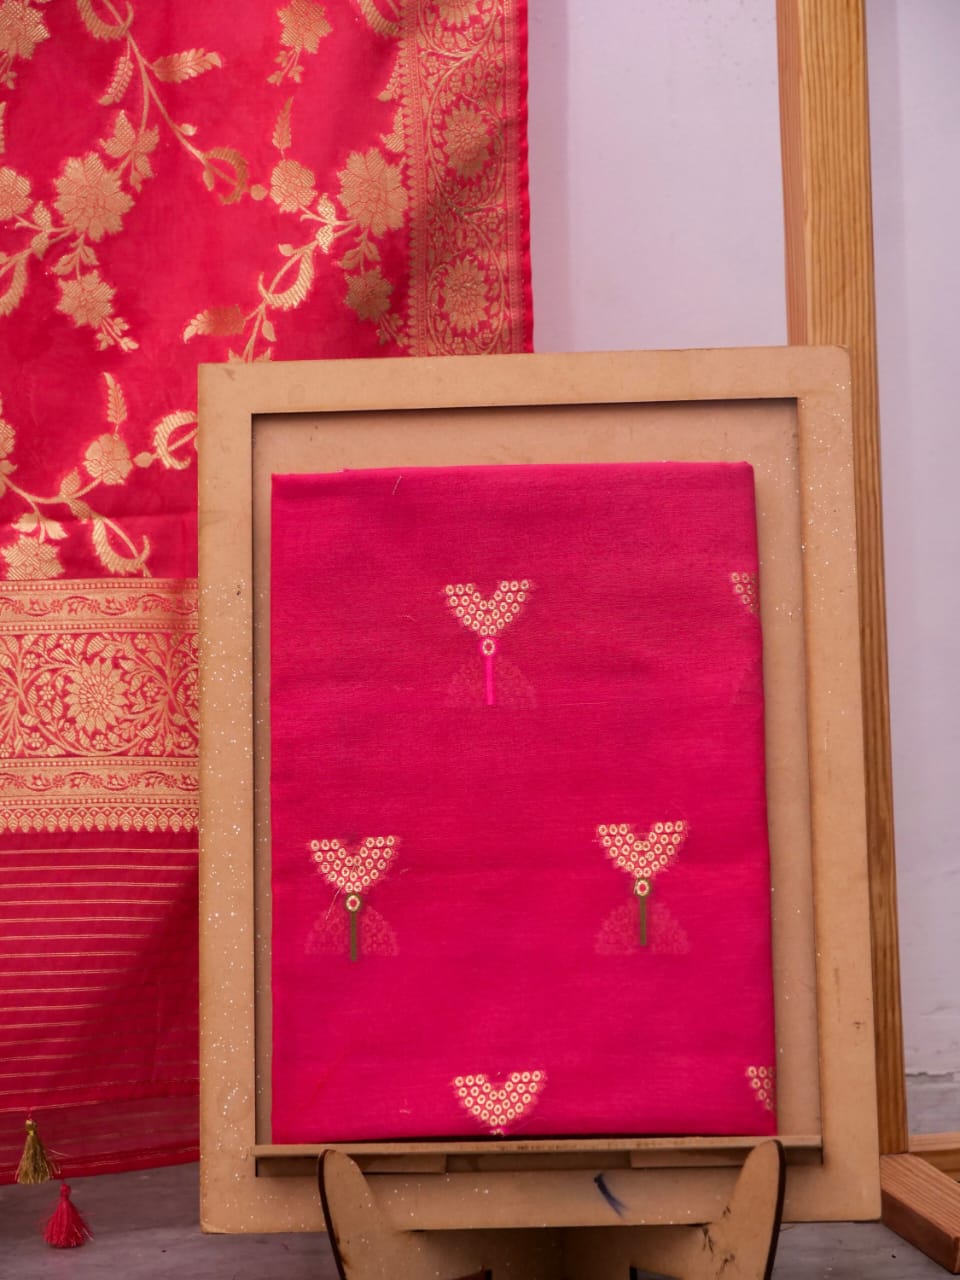 Imperial Red Banarasi Cotton Silk Alfi Suits